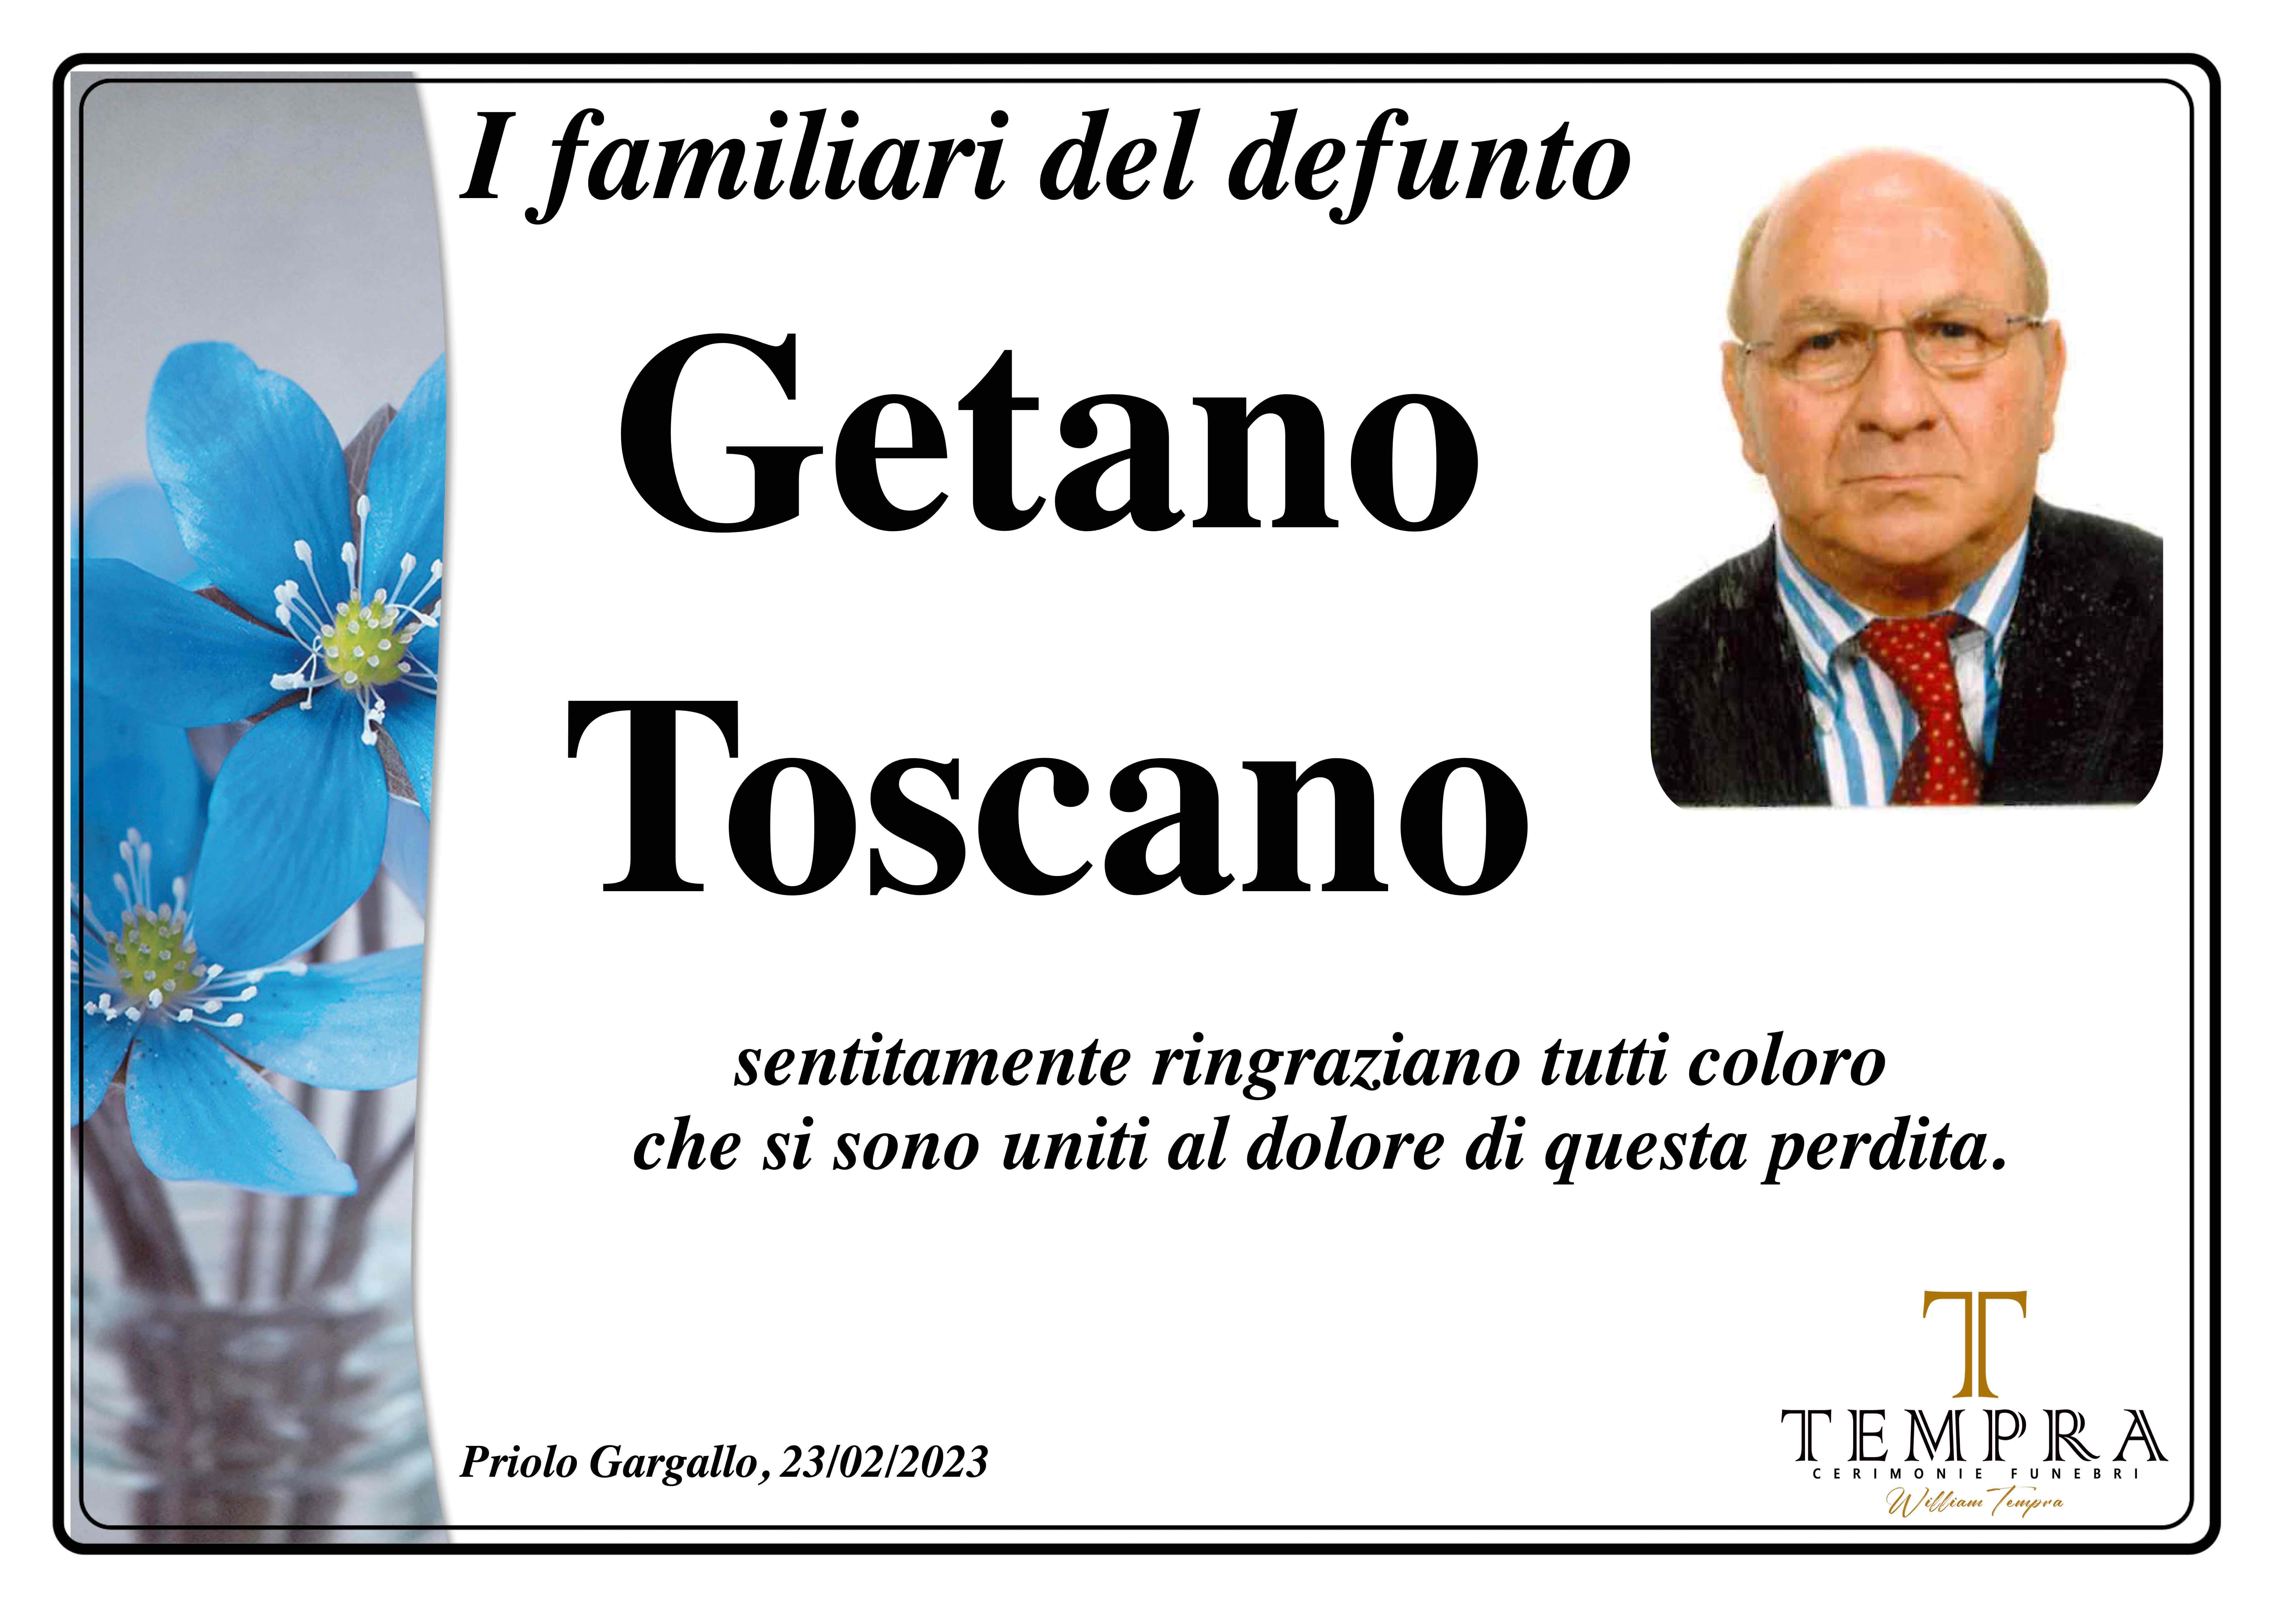 Gaetano Toscano